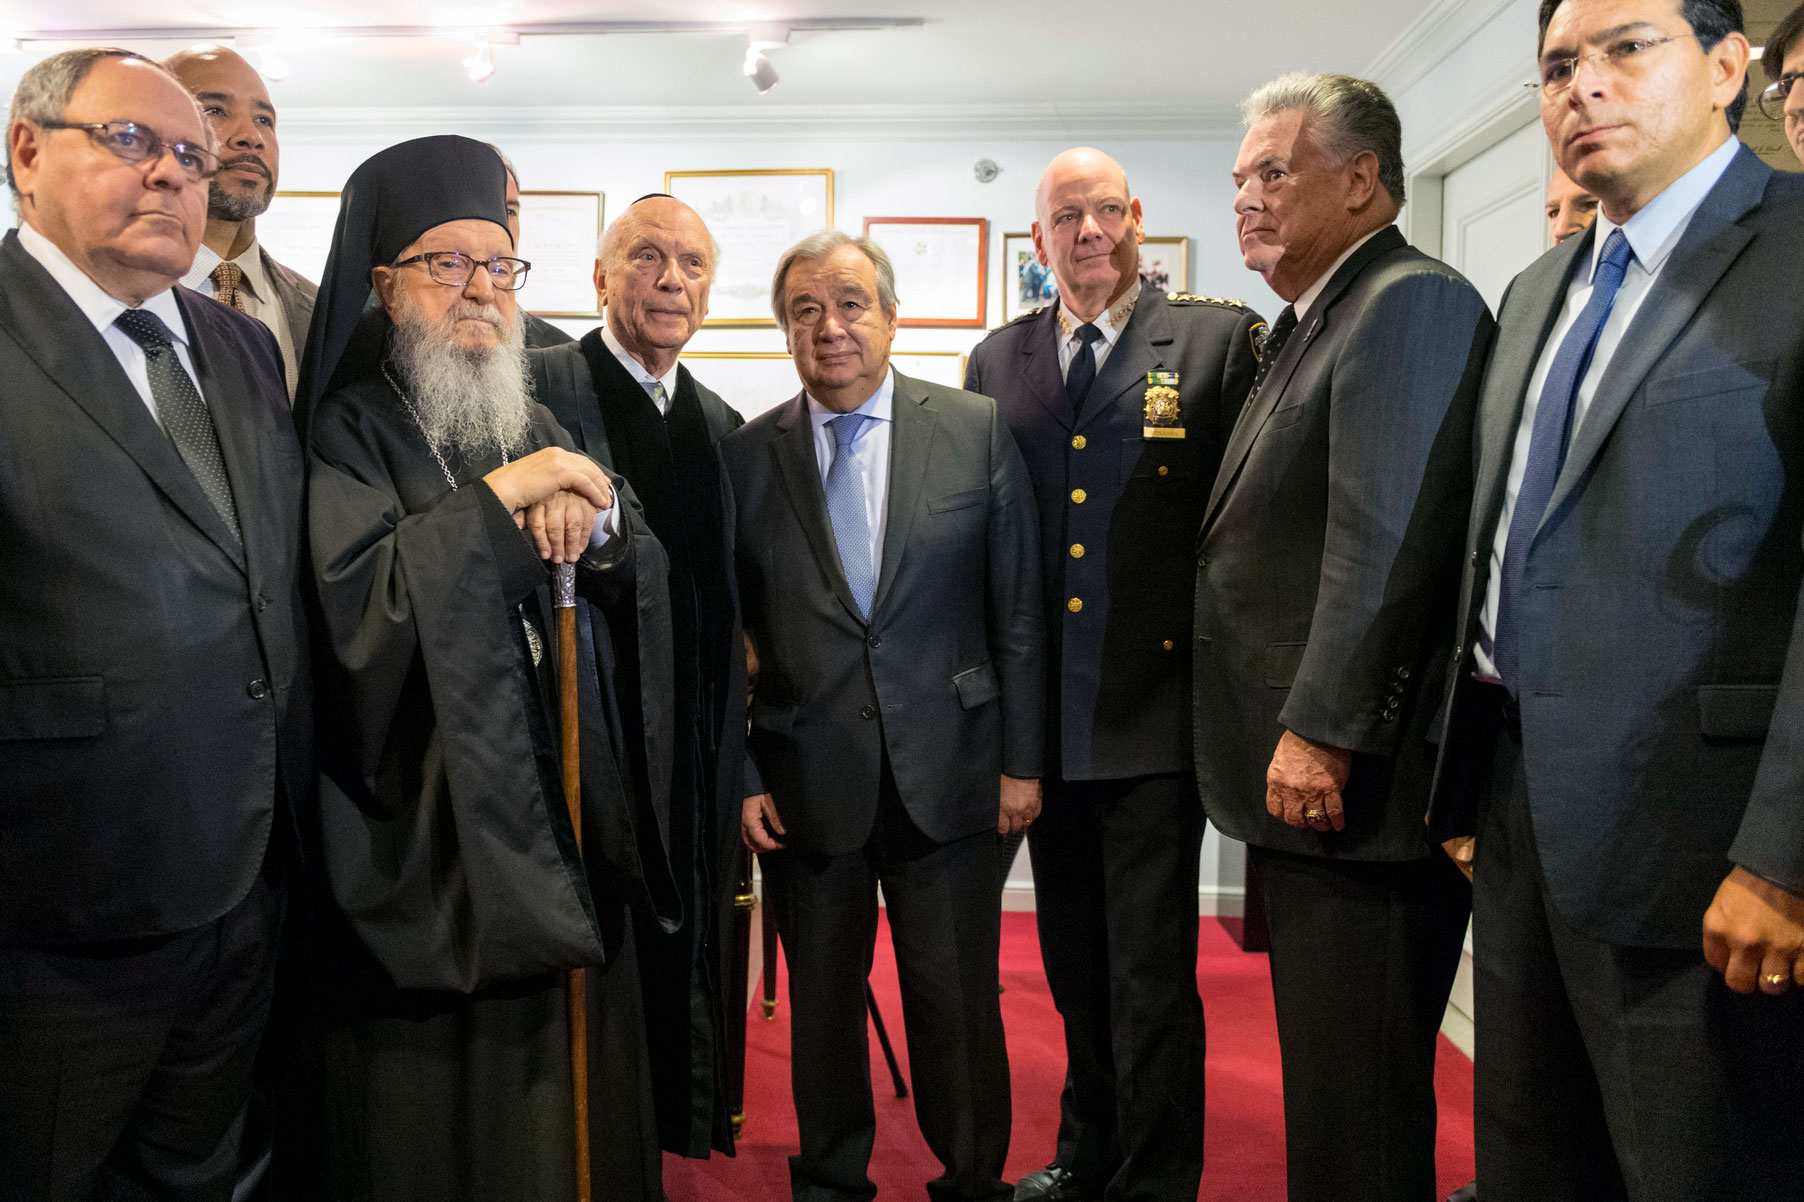 Group photo of Secretary-General António Guterres, Arthur Schneier, Archbishop Demetrios, Danny Danon, amongst others.